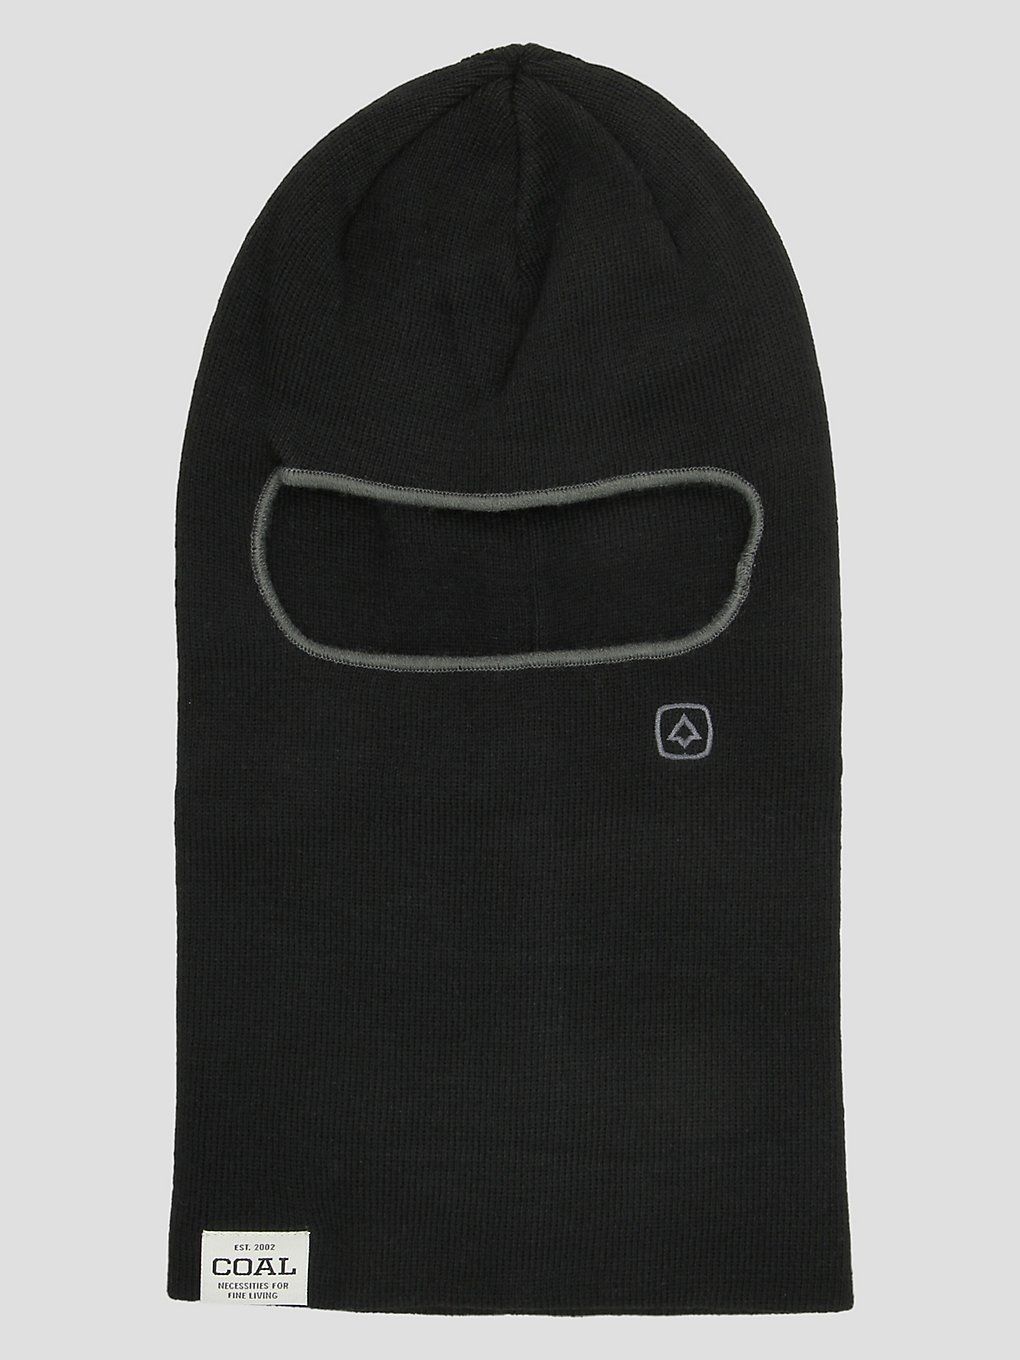 Coal Uniform Clava Halswärmer black kaufen